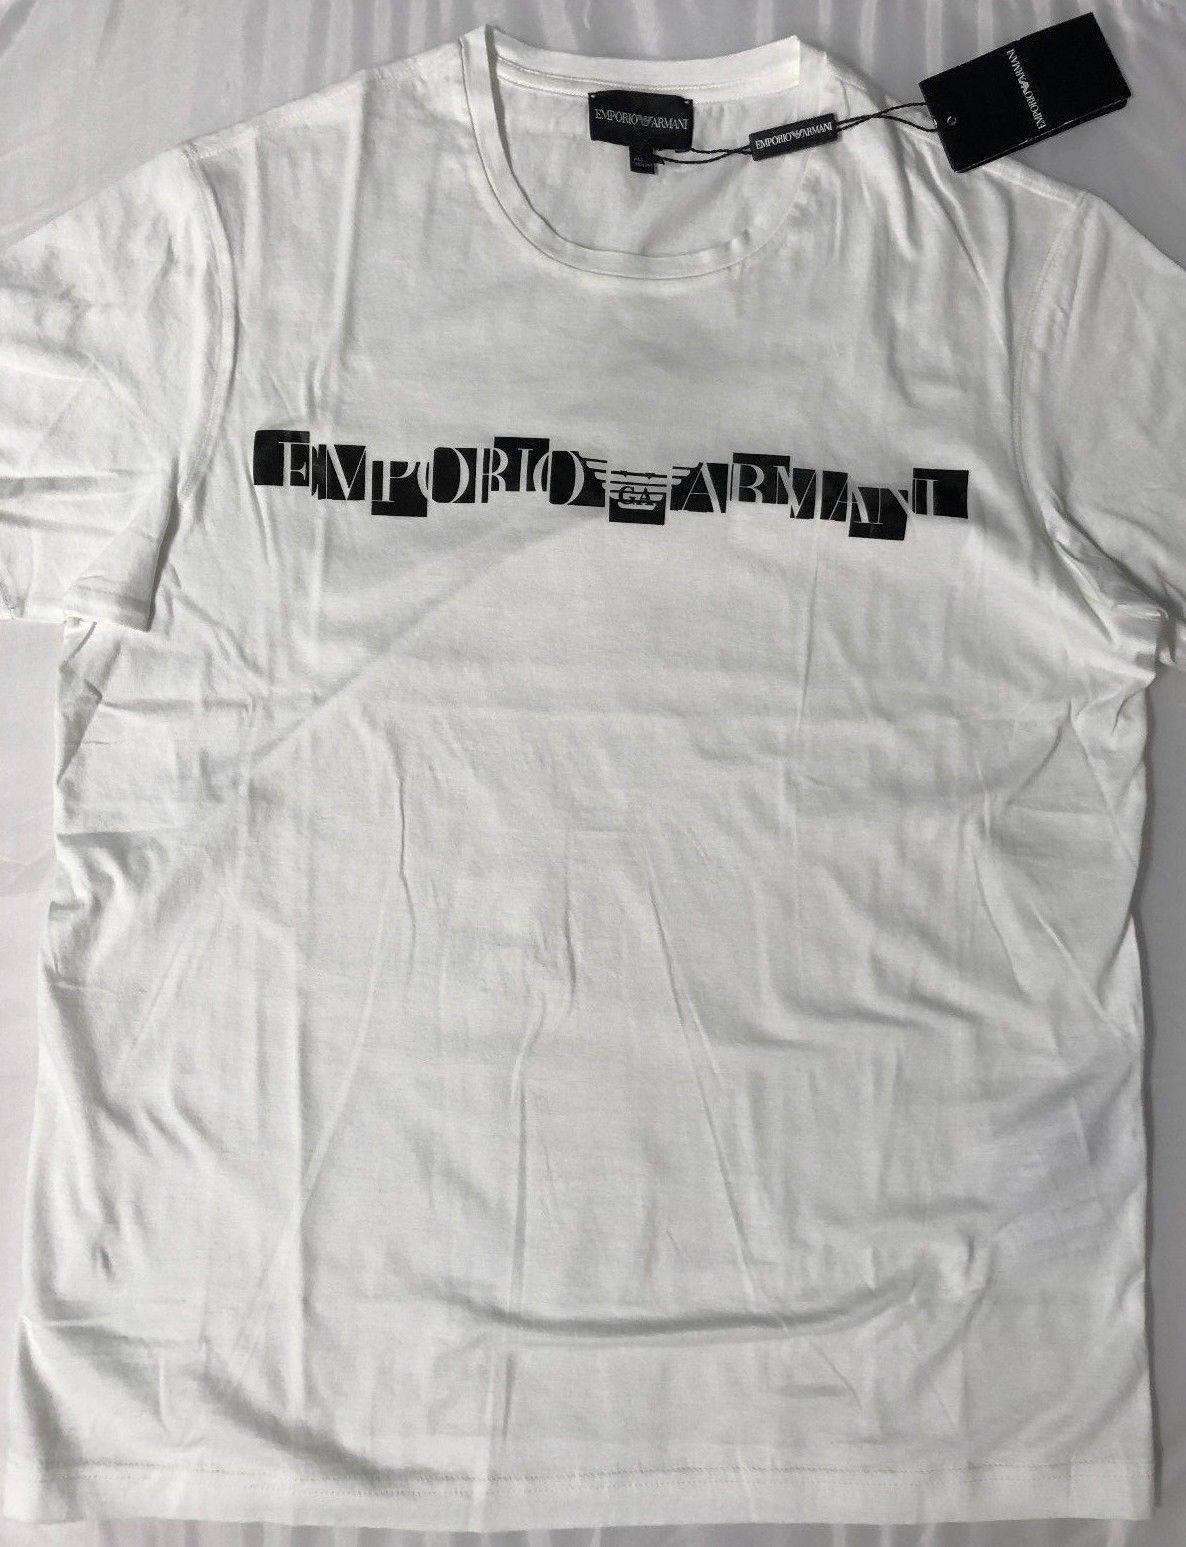 Белая футболка с коротким рукавом Emporio Armani APH03, NWT 175 долларов США